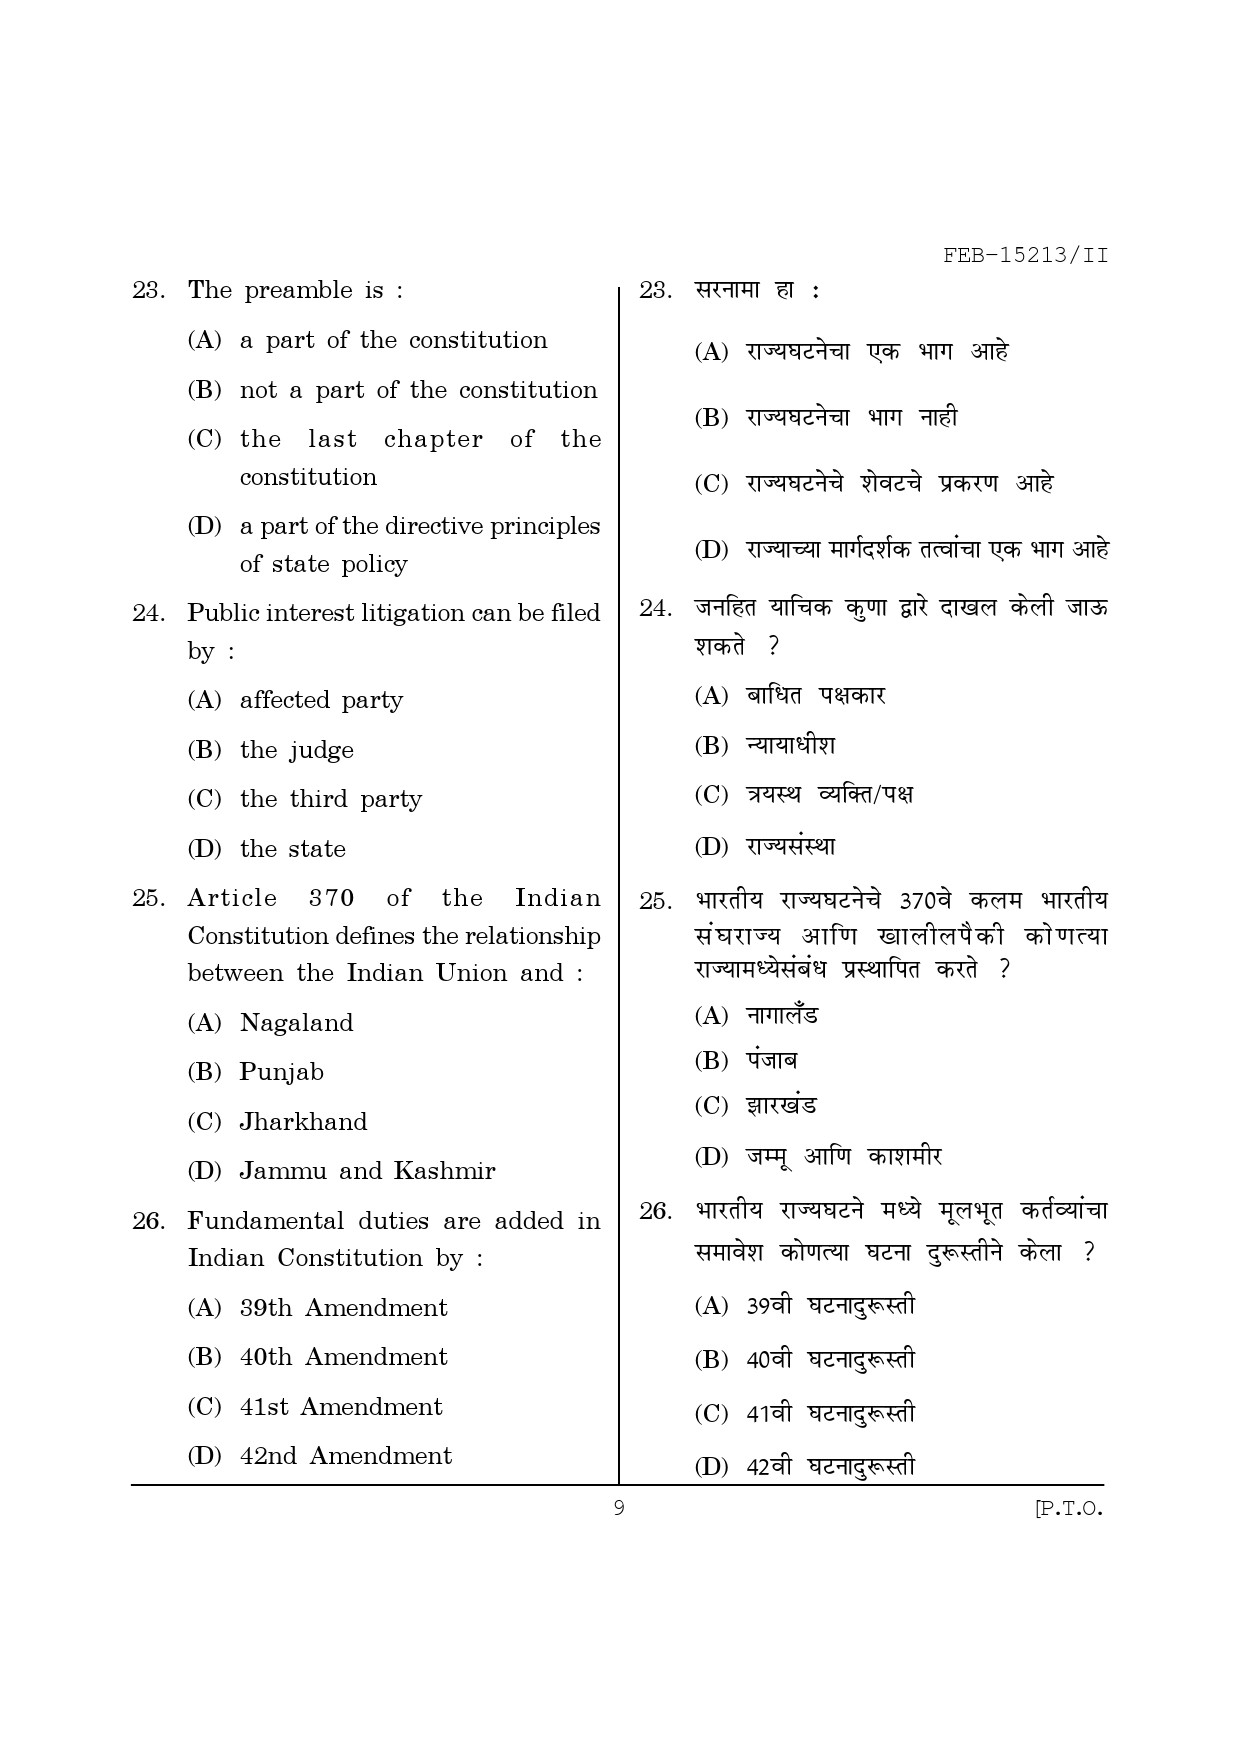 Maharashtra SET Political Science Question Paper II February 2013 9